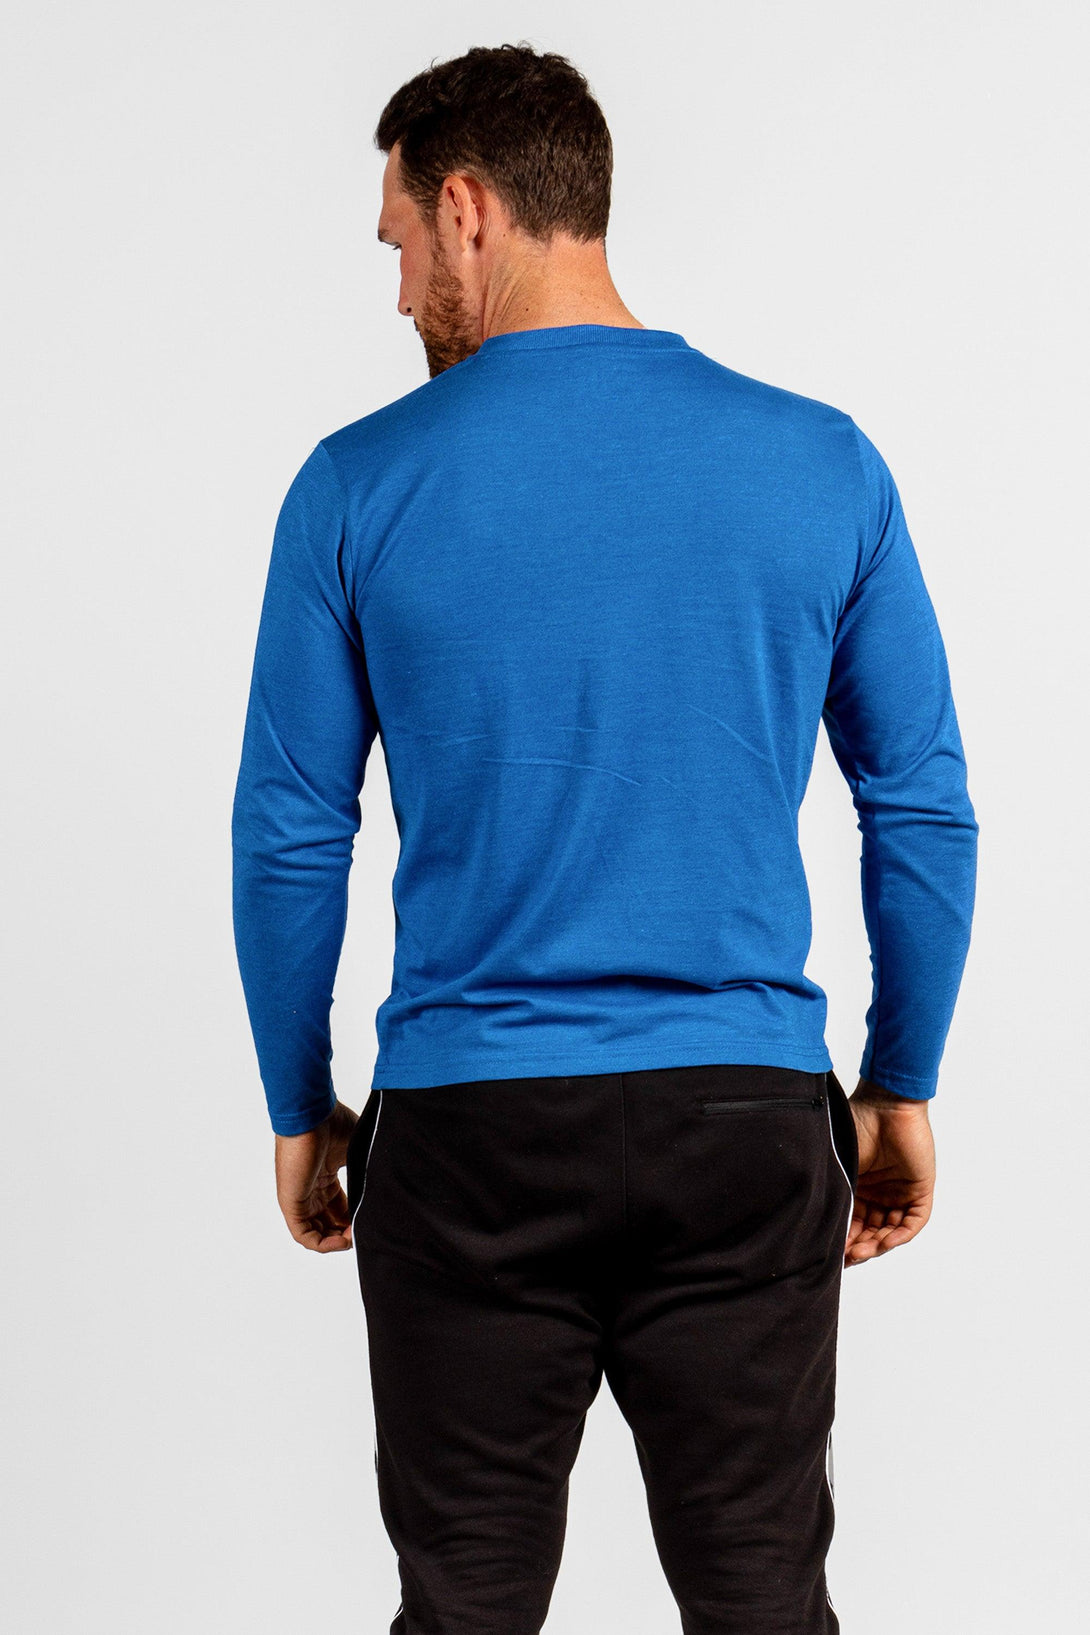 V-Neck Long Sleeve T-Shirts | BLUE - WINE - NAVY - Pack of 4 - FTS